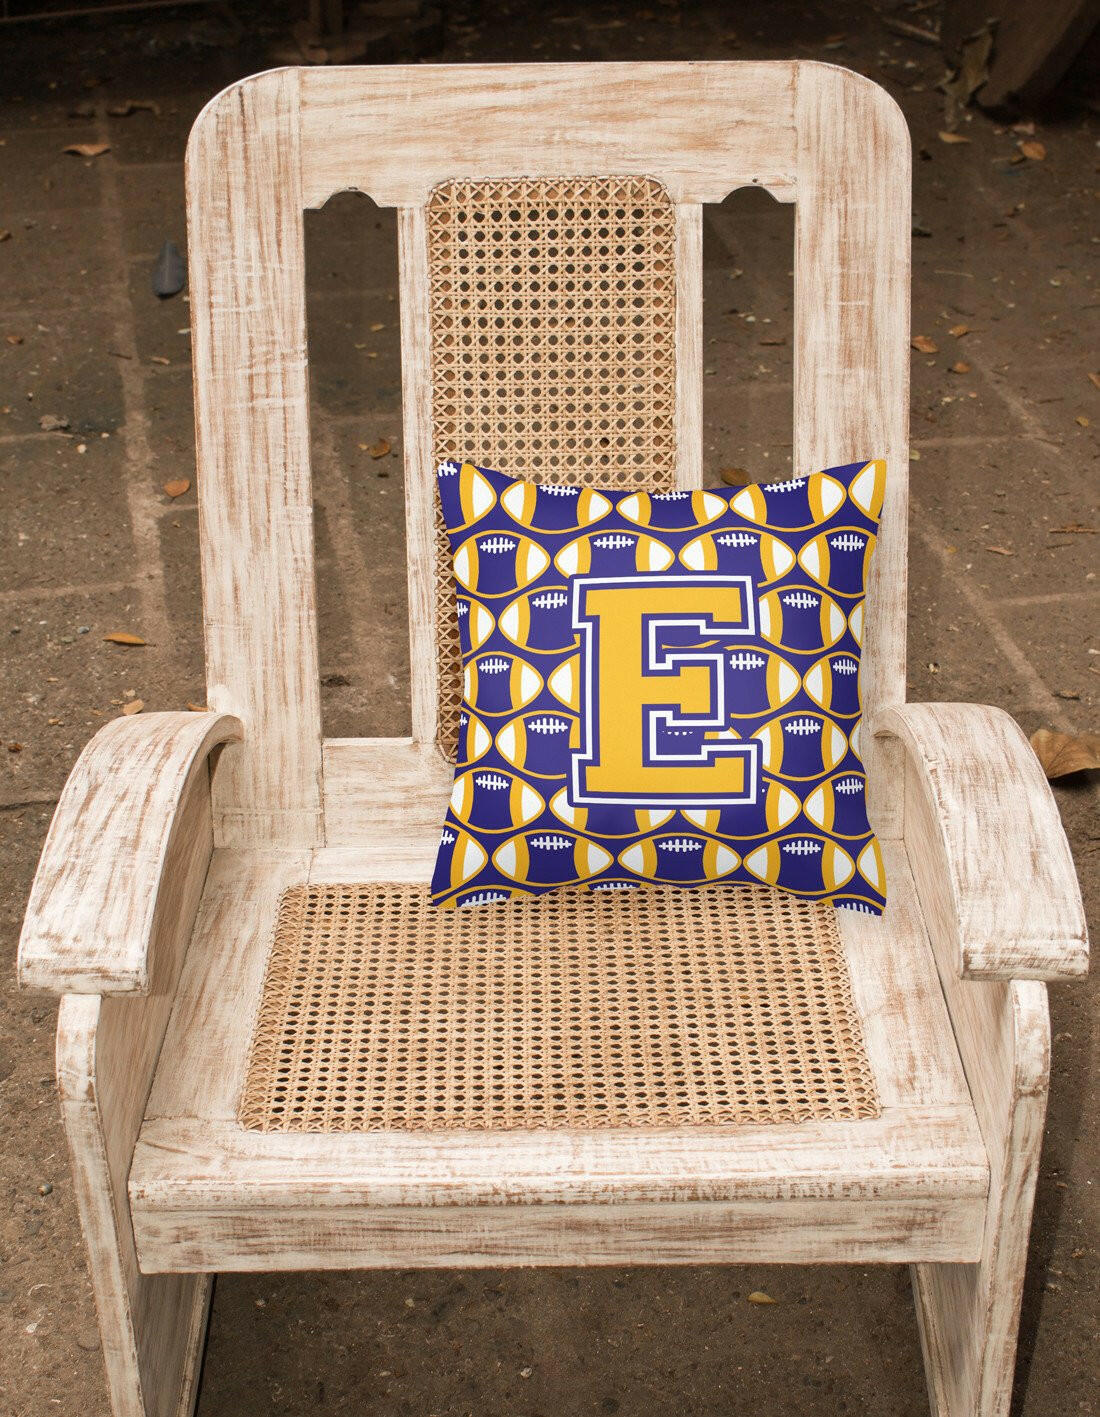 Letter E Football Purple and Gold Fabric Decorative Pillow CJ1064-EPW1414 by Caroline's Treasures